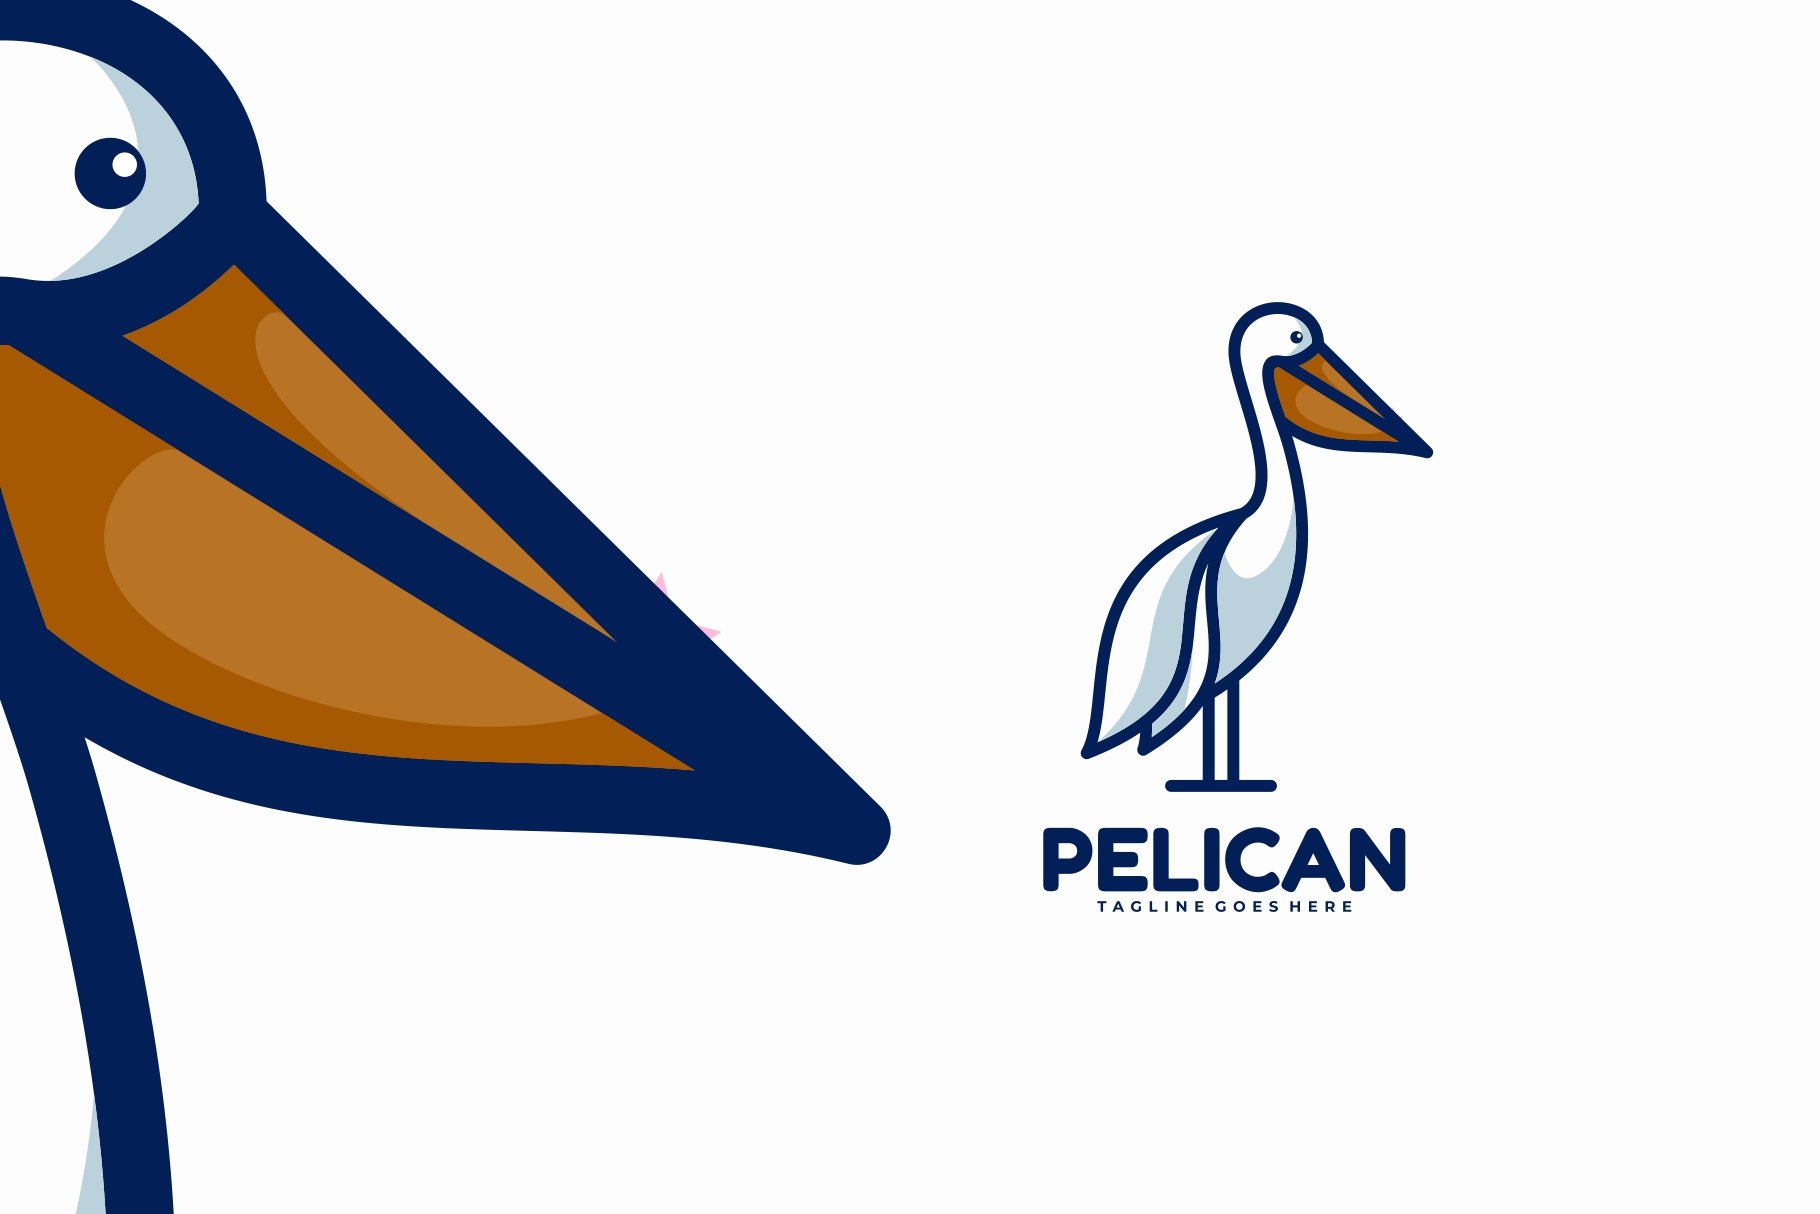 Pelican Mascot Cartoon Logo cover image.